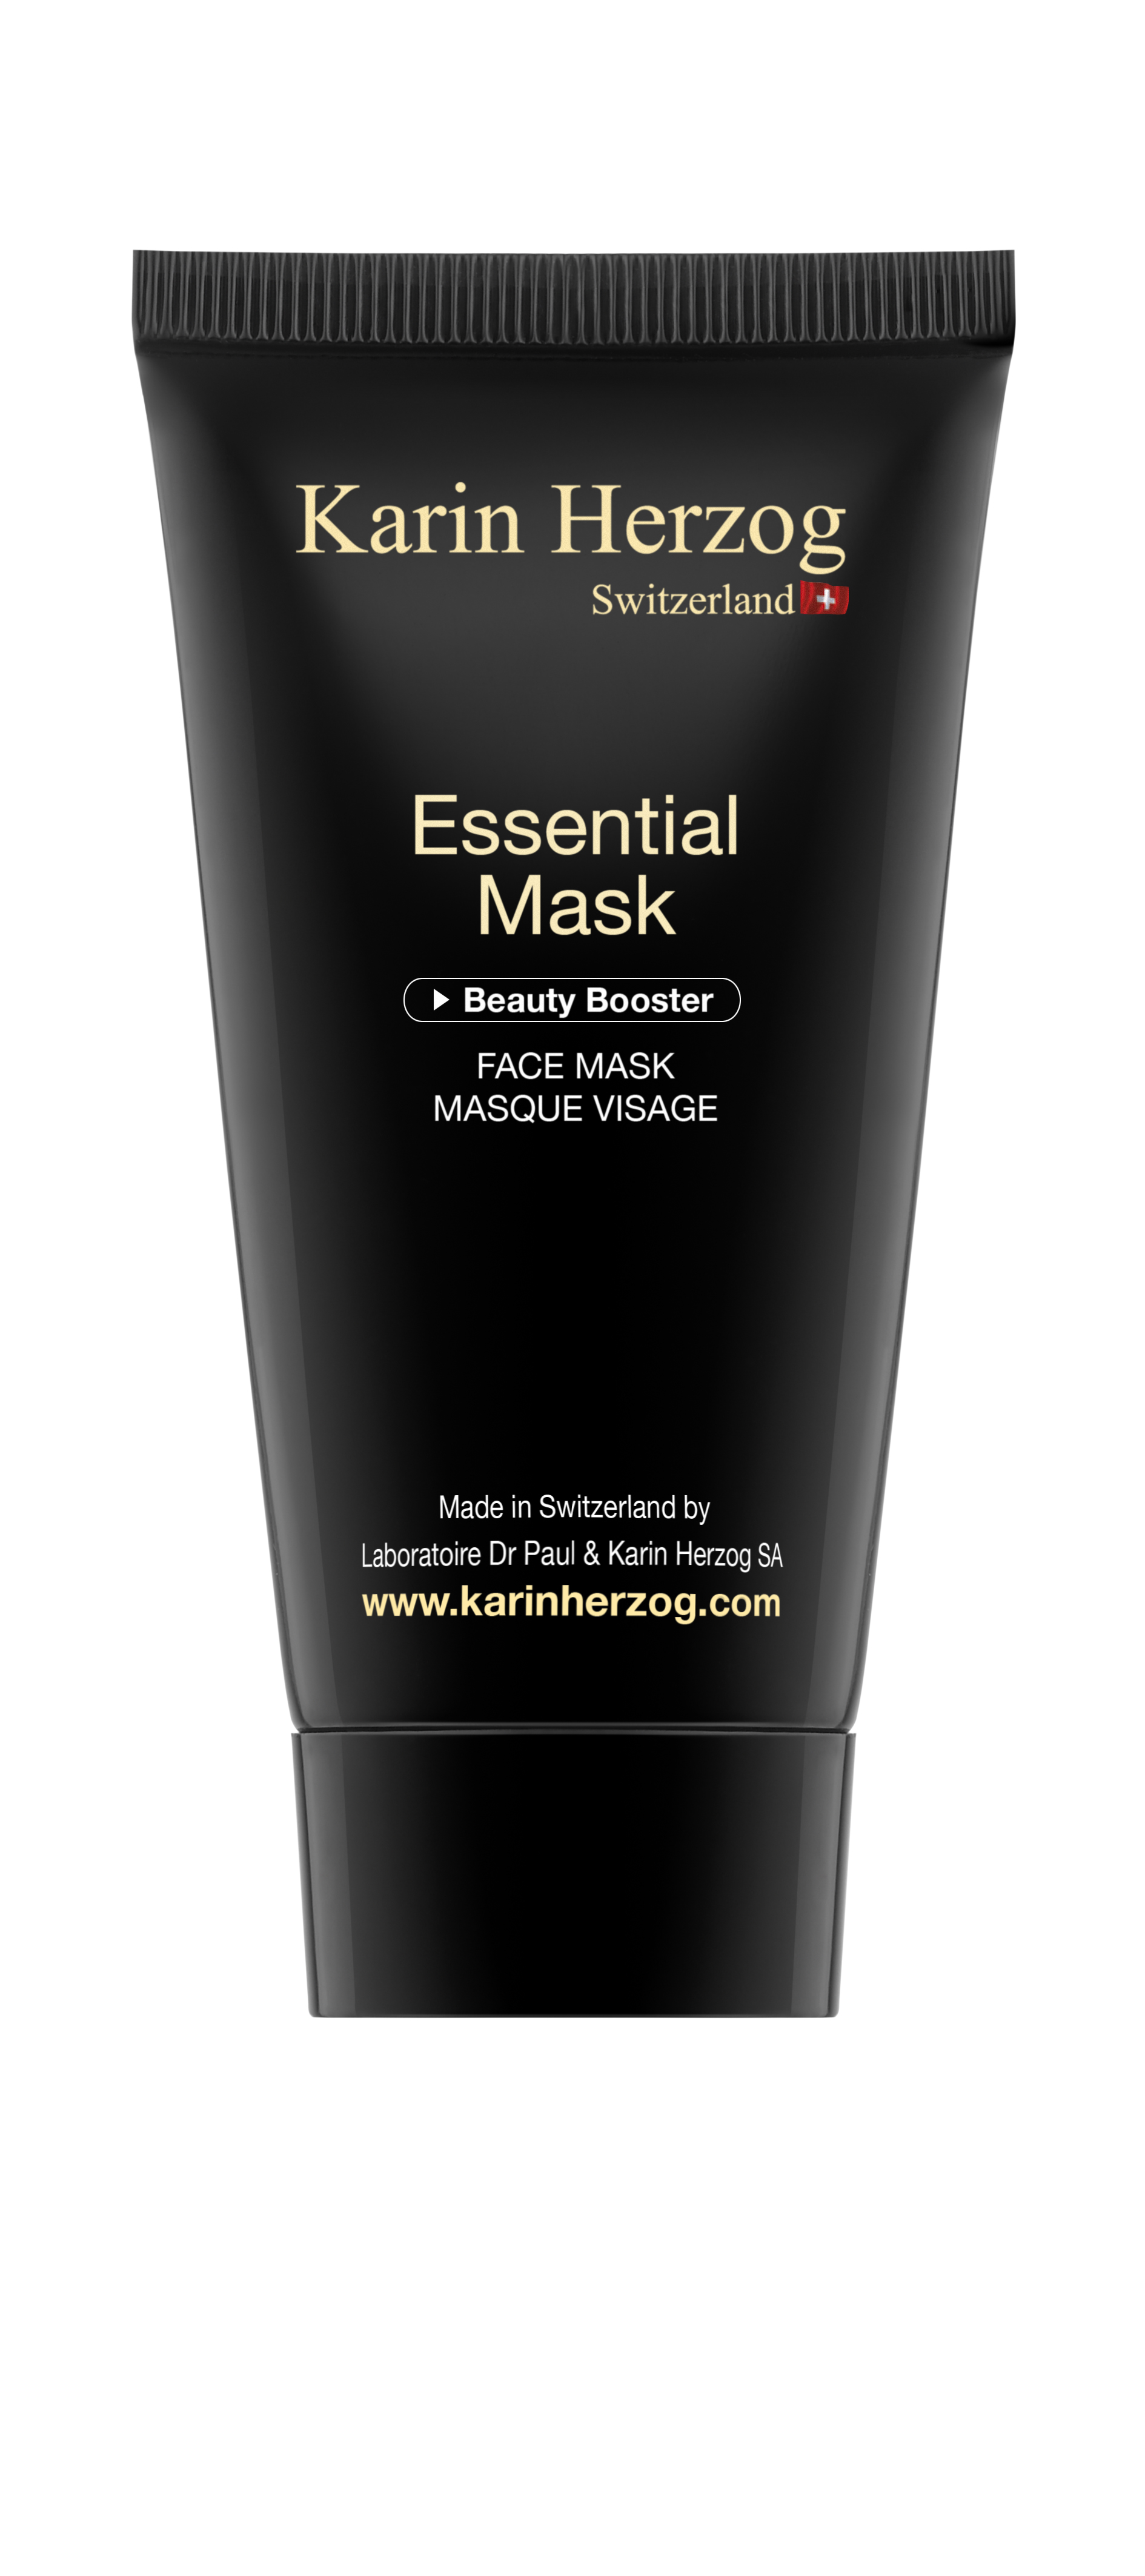 Karin Herzog Essential Face Mask 2% 50ml